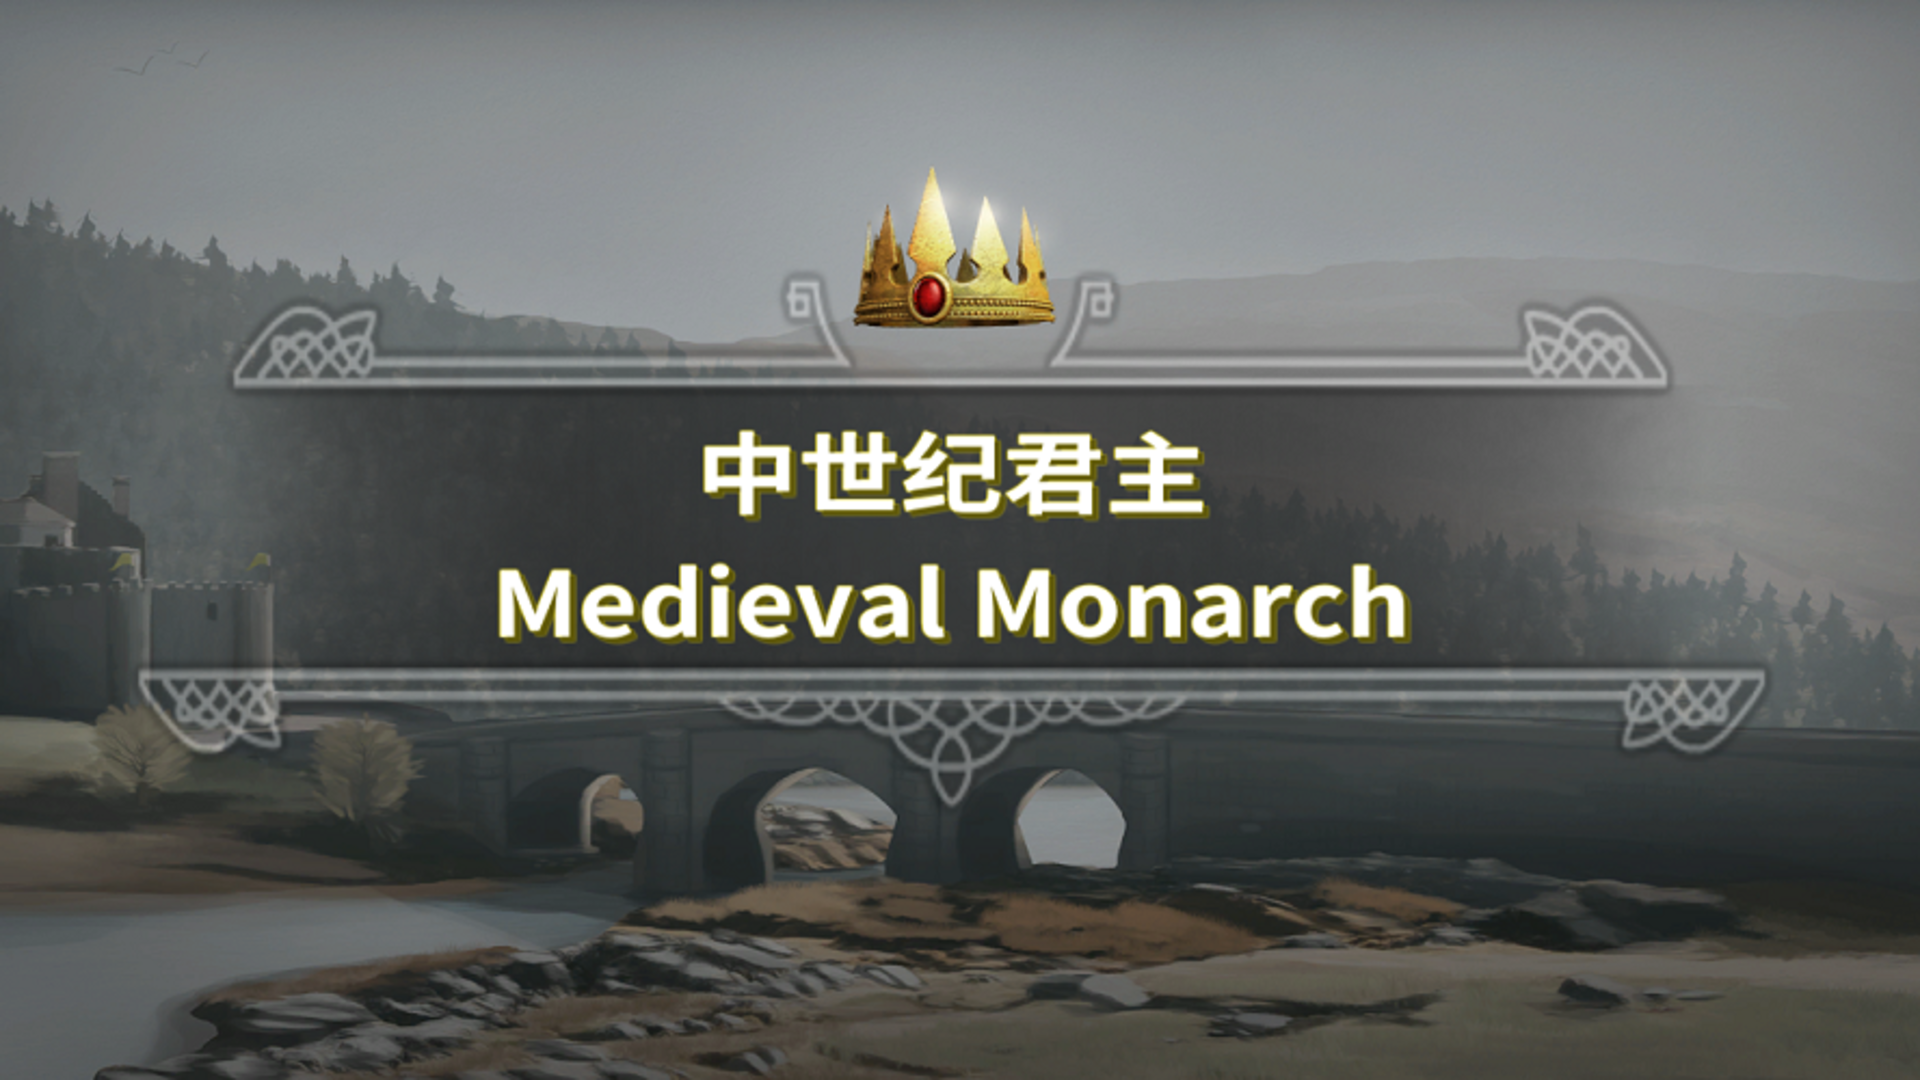 Banner of monarca medieval 